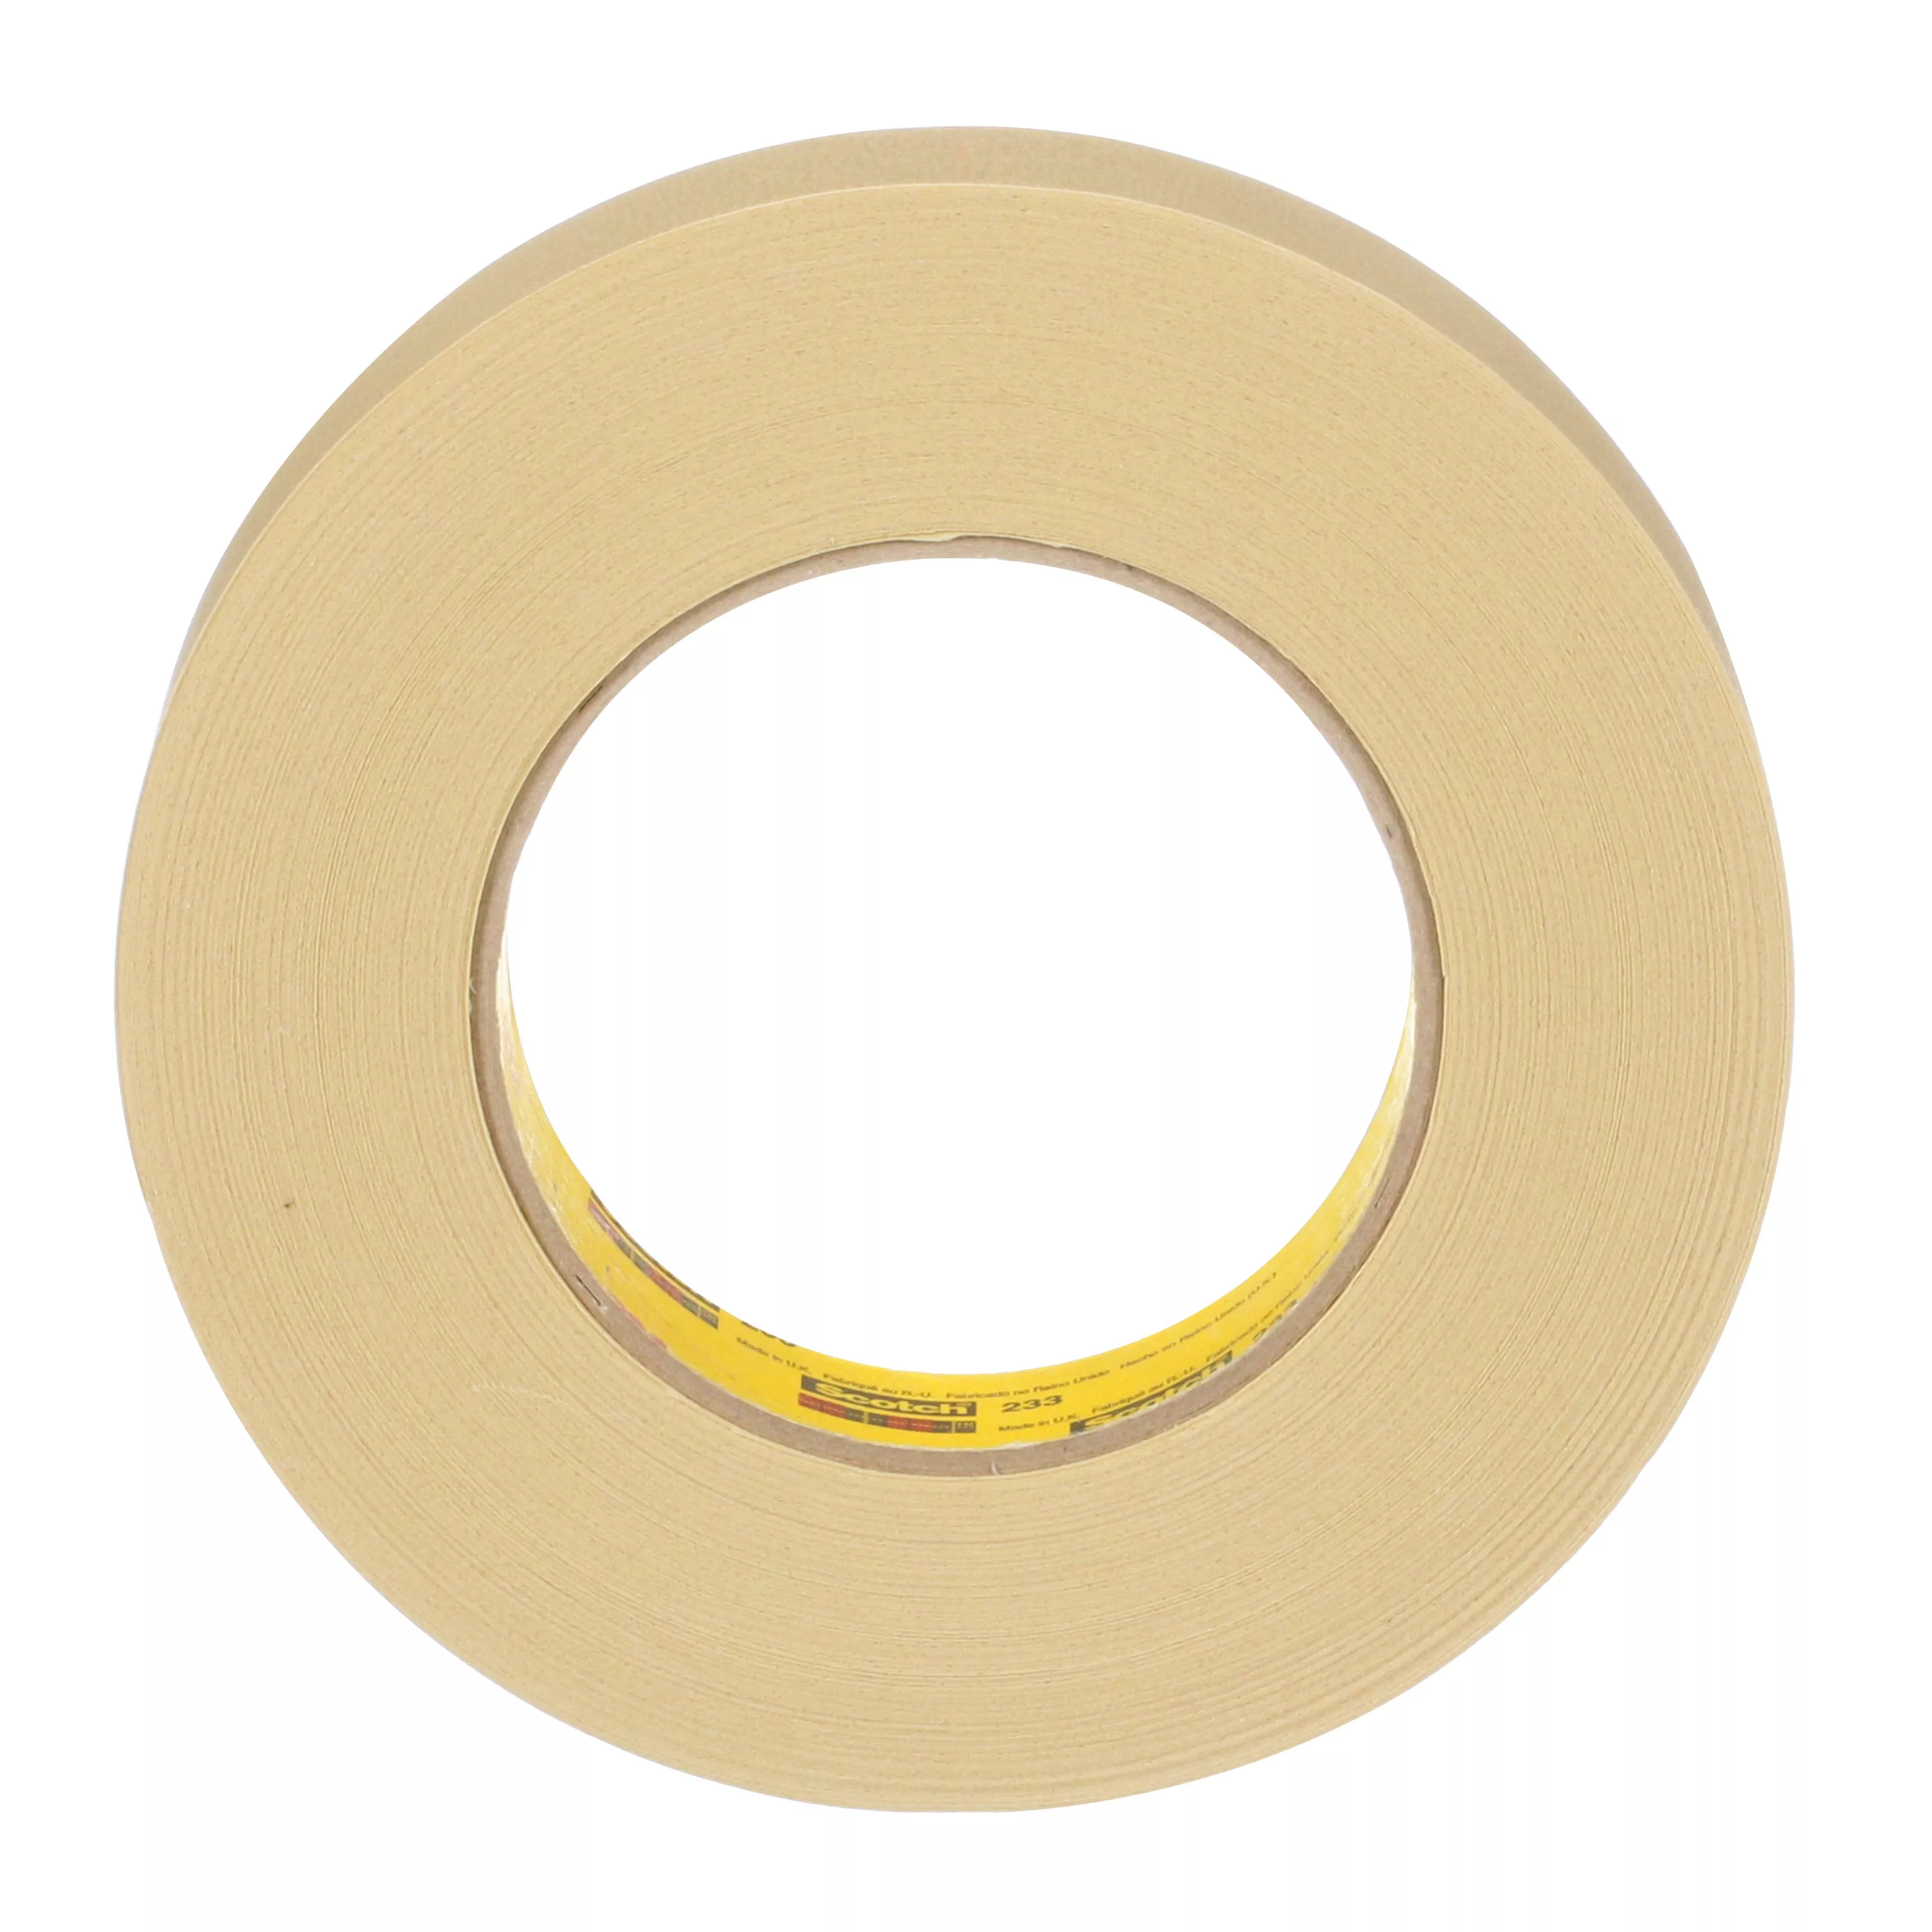 Scotch® Automotive Refinish Masking Tape 233, 06336, 24 mm x 55 m, 36
per case